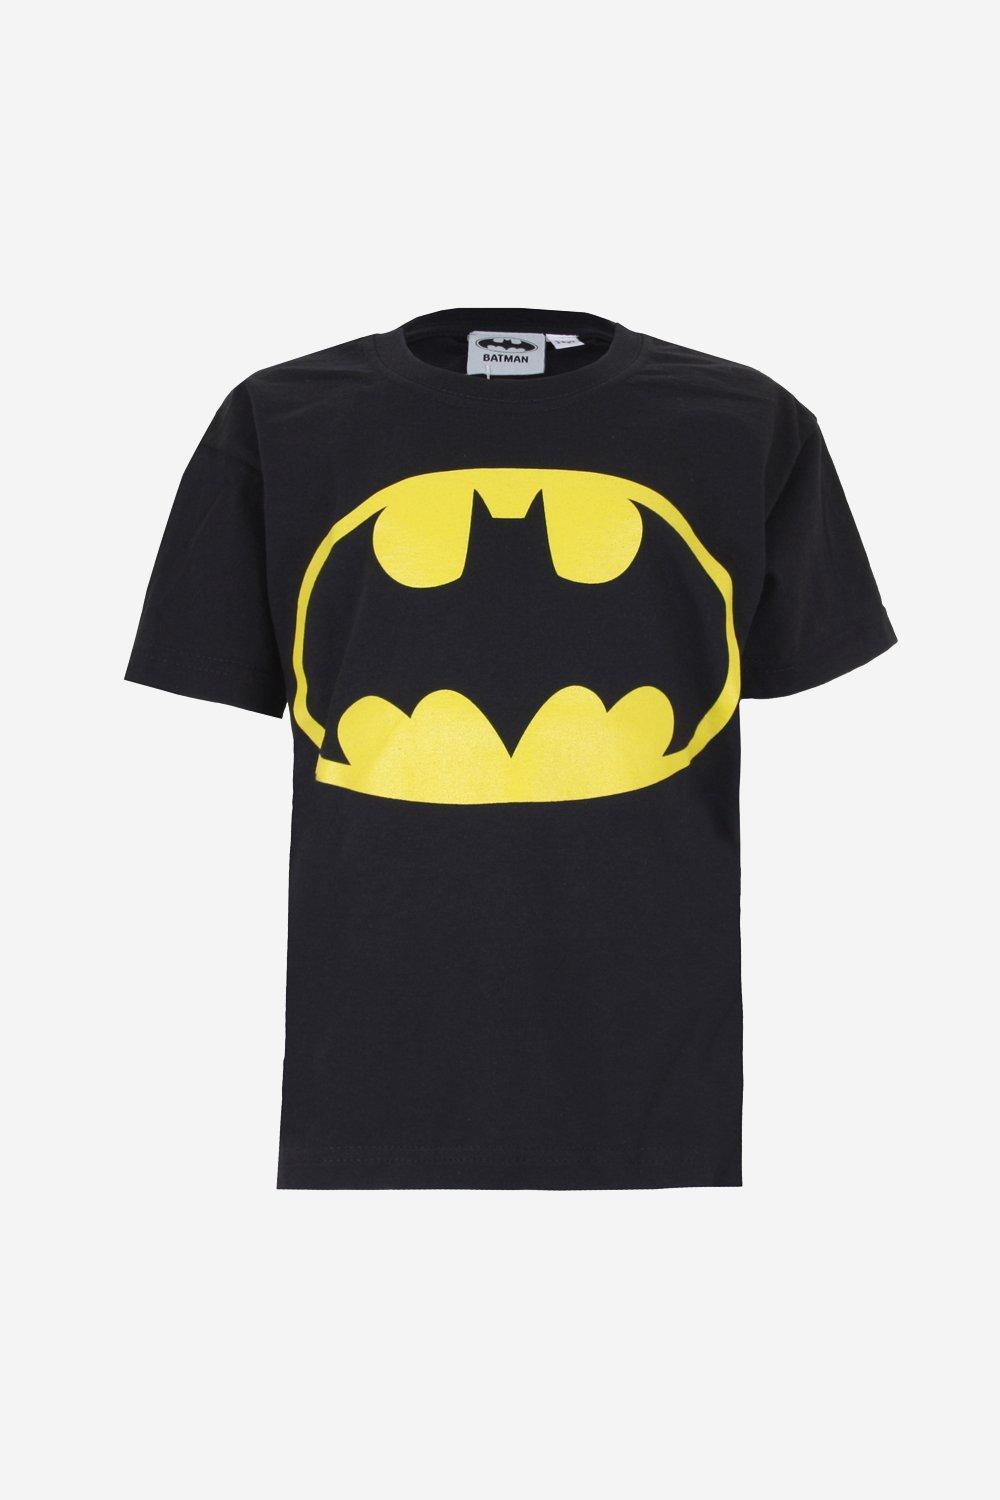 Batman Logo Boys T-Shirt